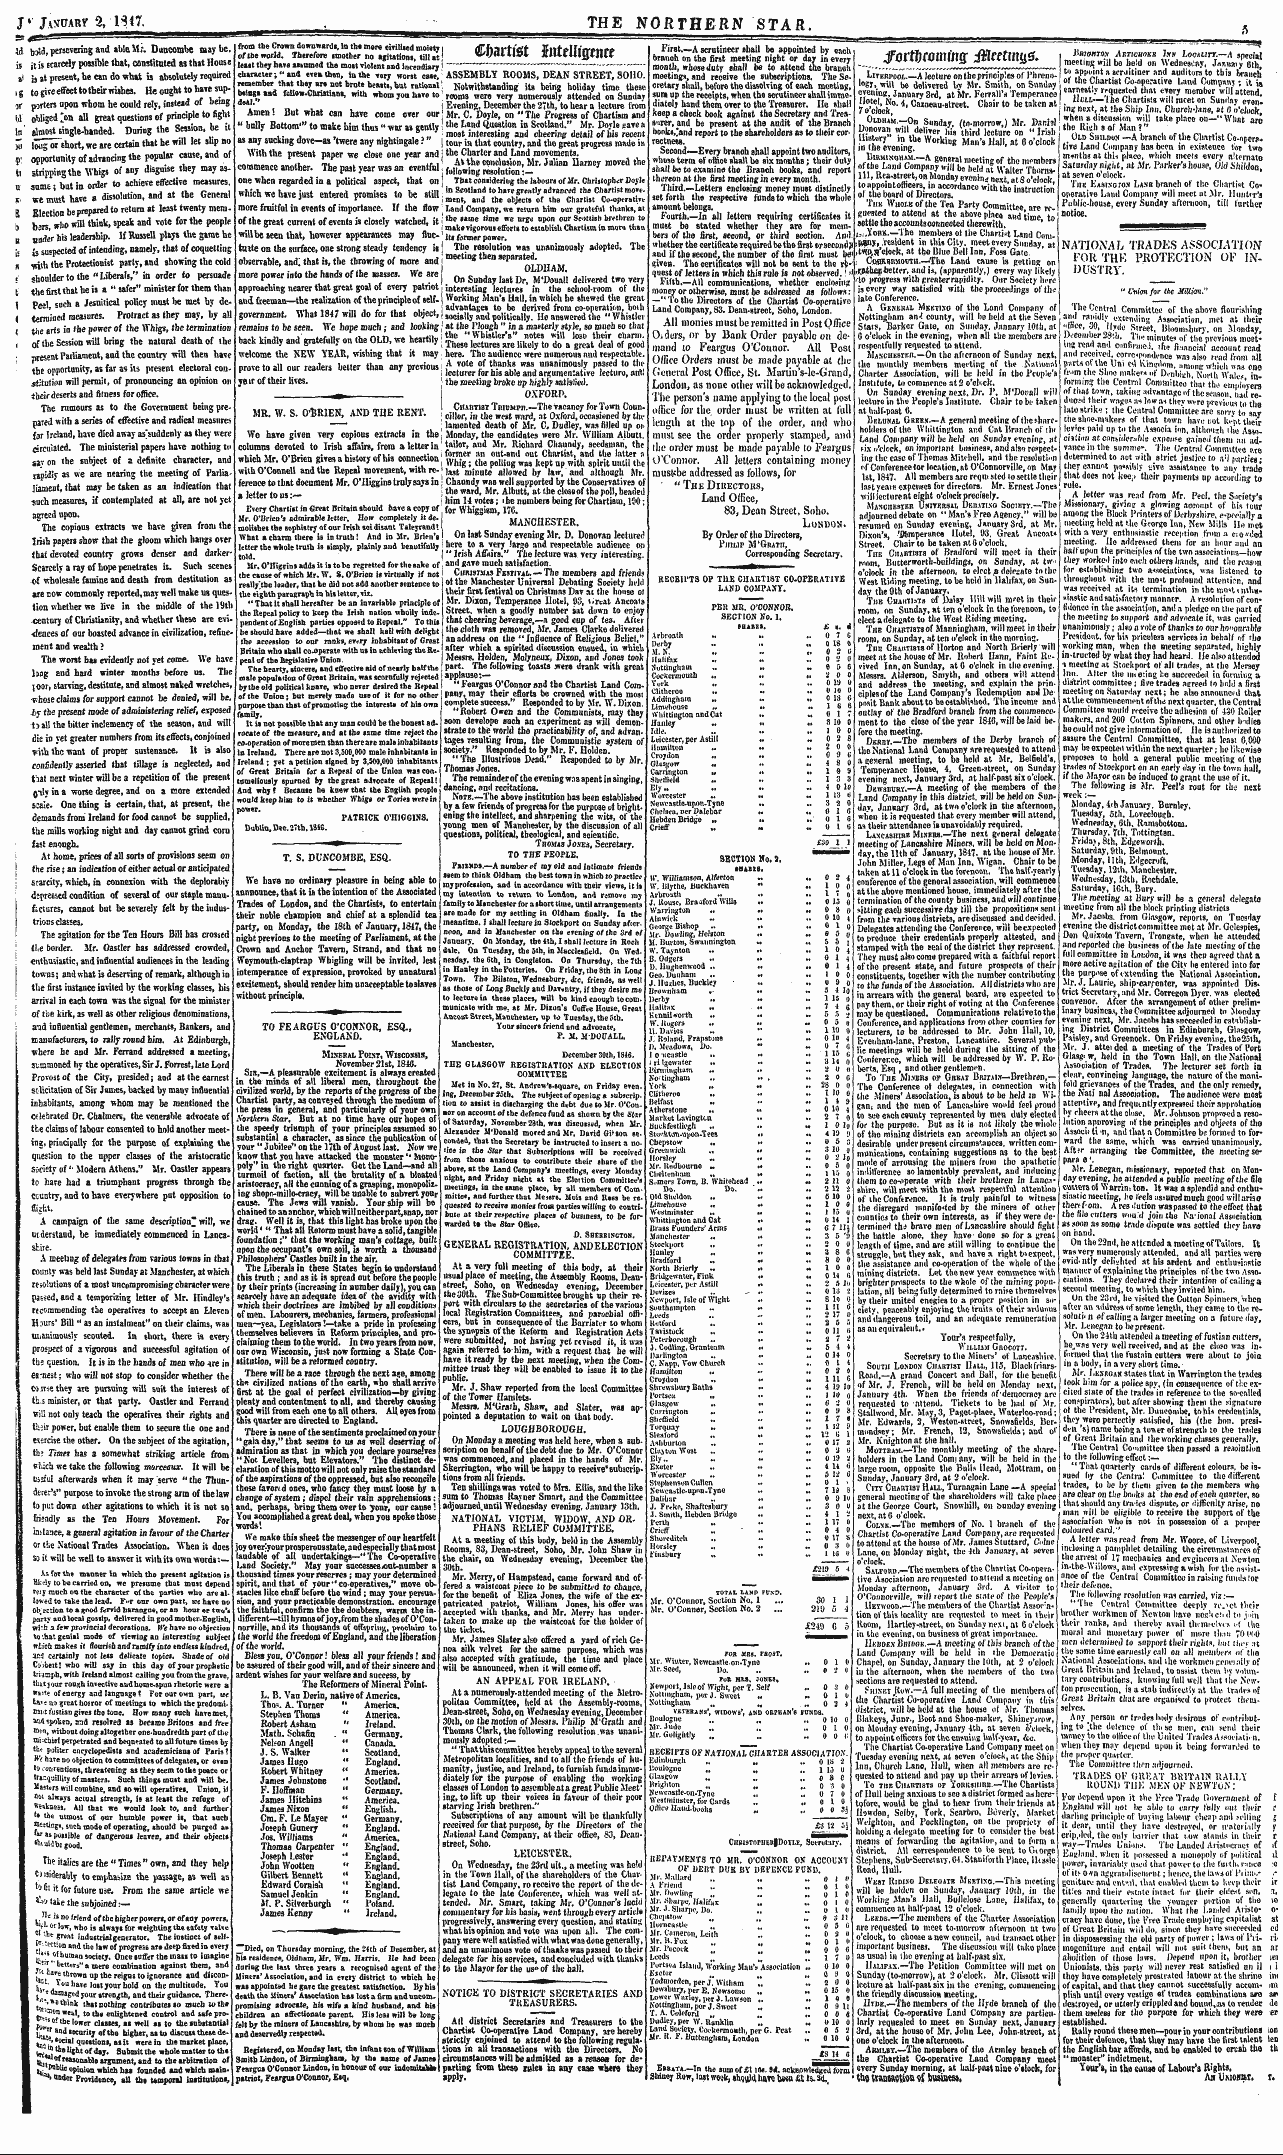 Northern Star (1837-1852): jS F Y, 2nd edition - C&Arttst Fitmifltme